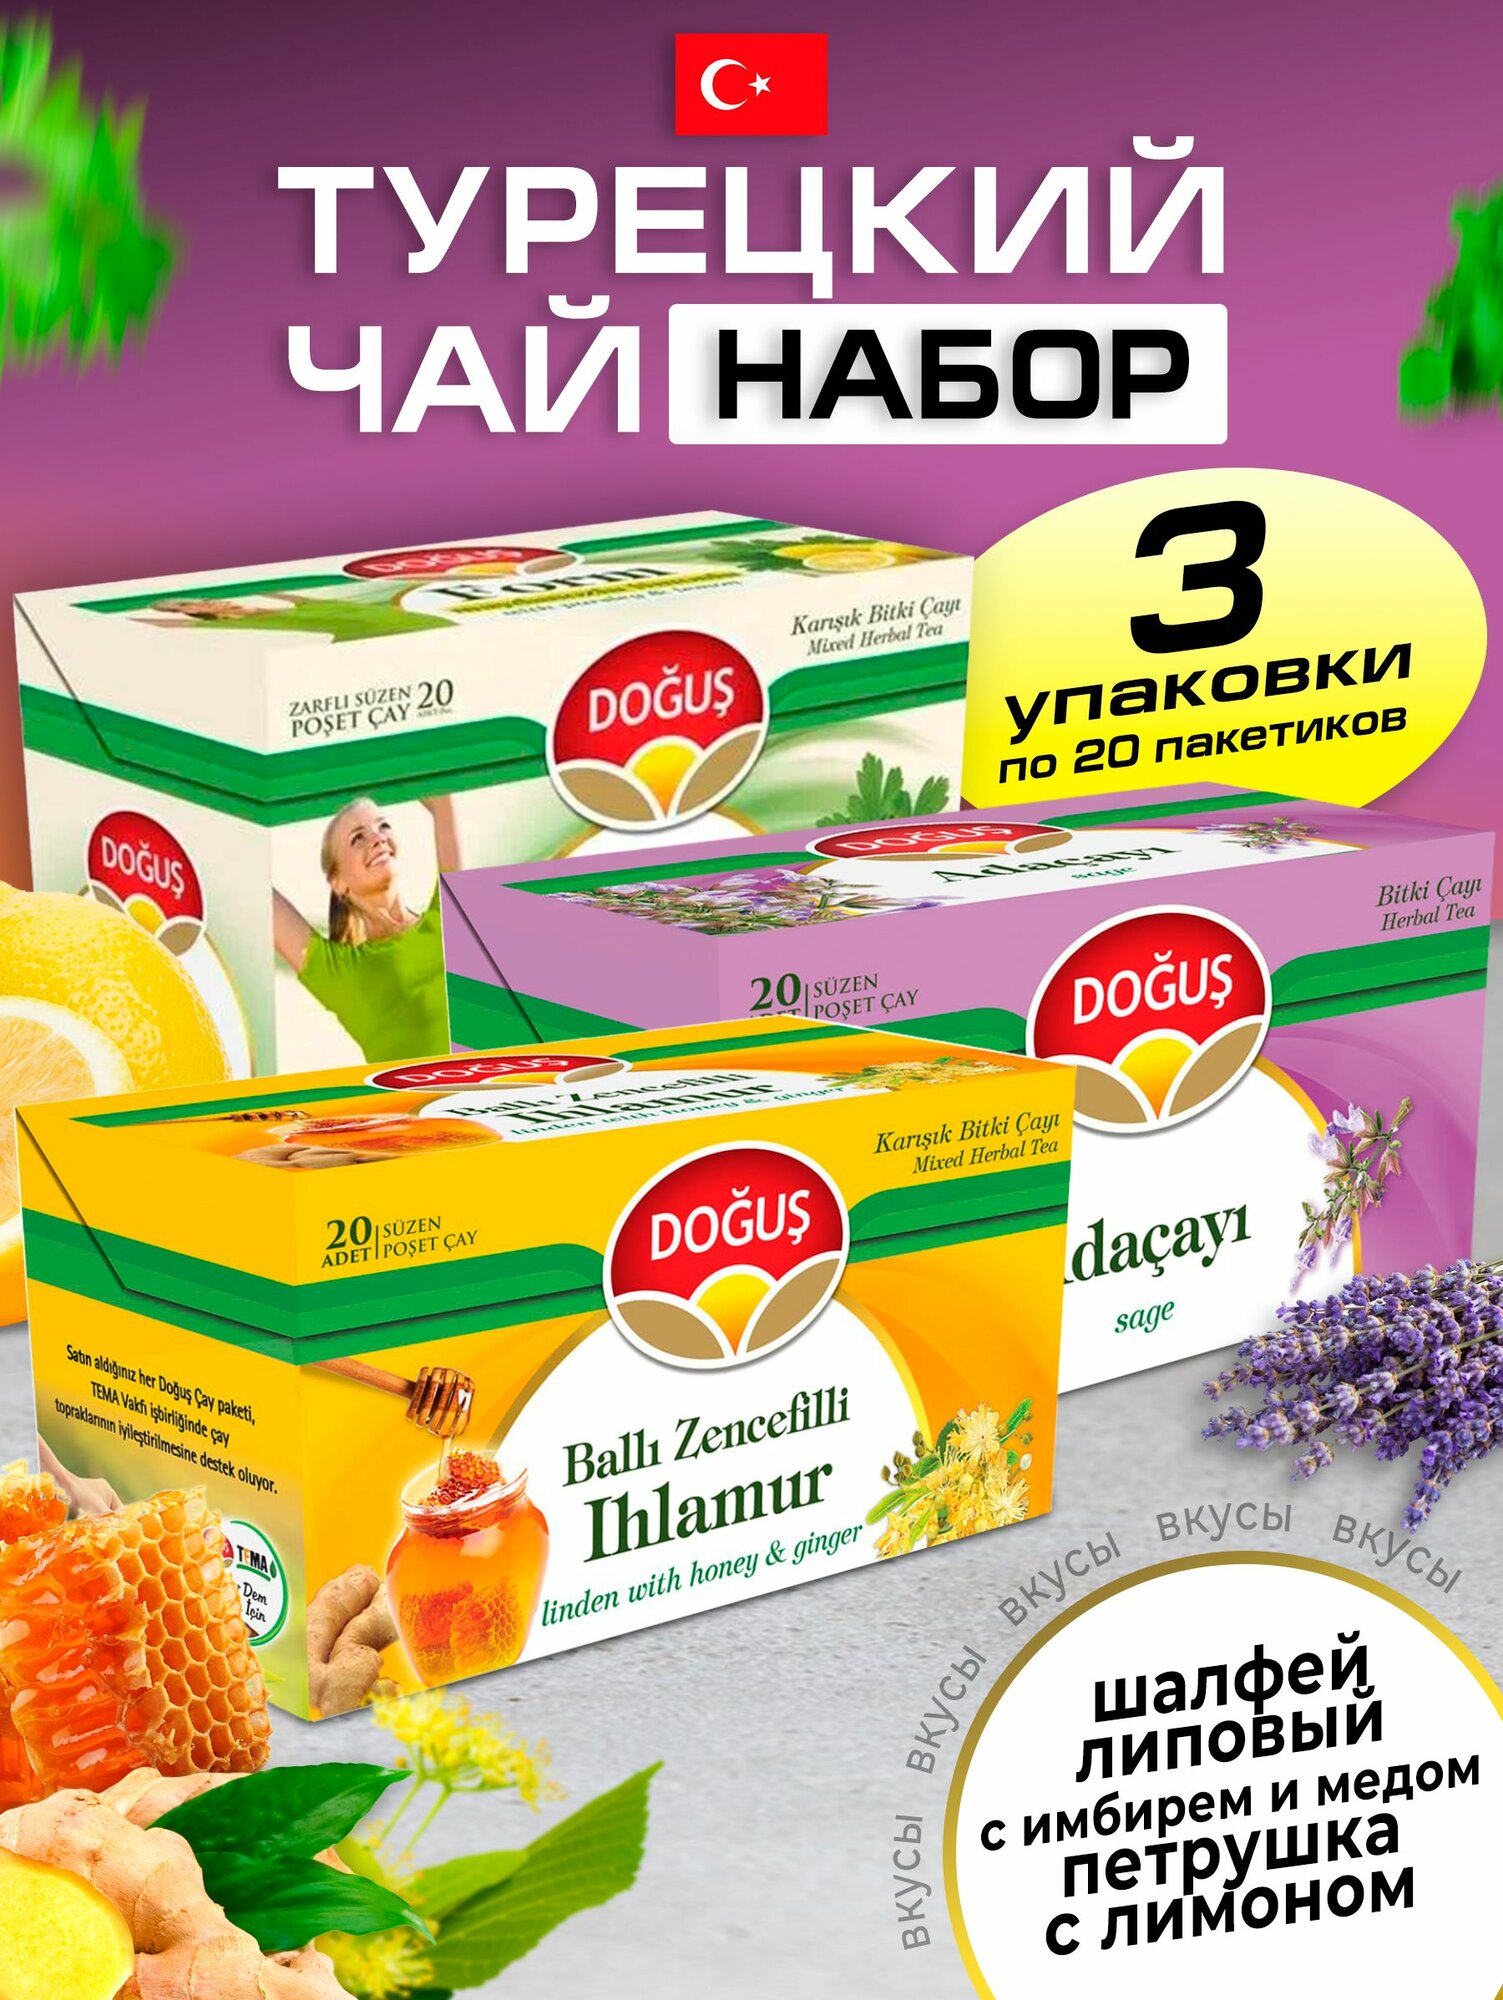 Чай набор имбирь мед-шалфей-петрушка лимон 3 уп по 20 шт